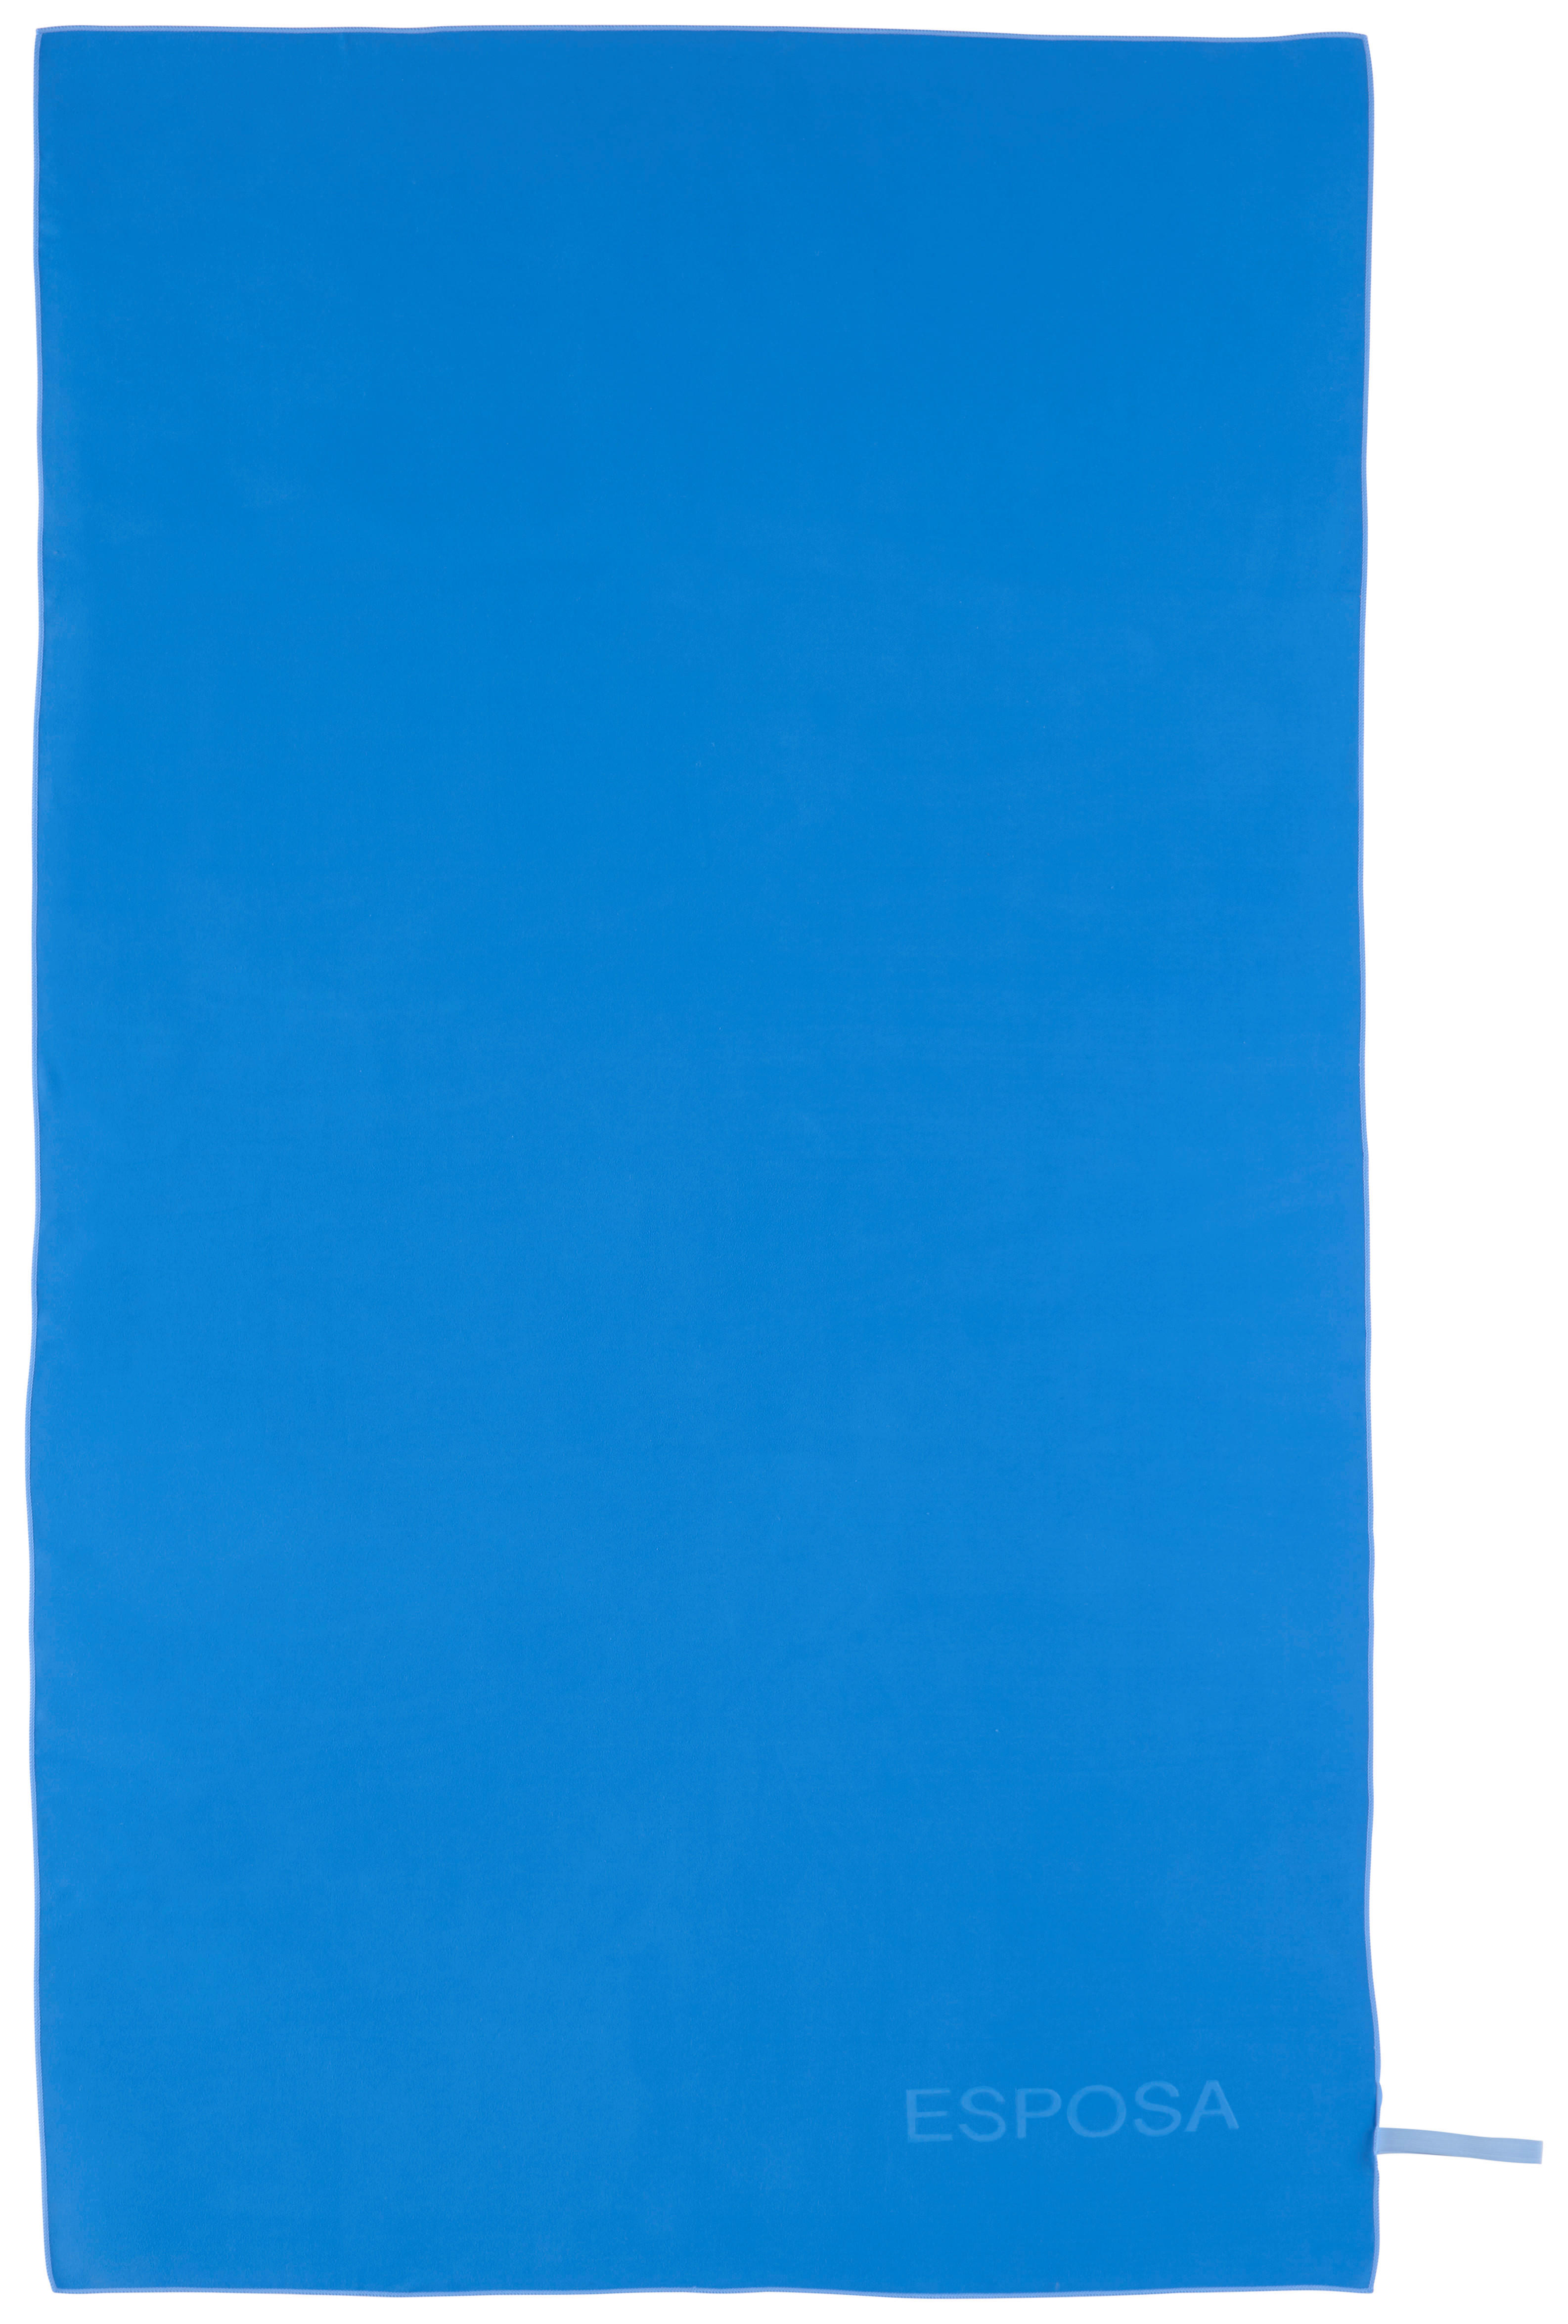 STRANDTUCH 70/140 cm  - Blau, KONVENTIONELL, Textil (70/140cm) - Esposa